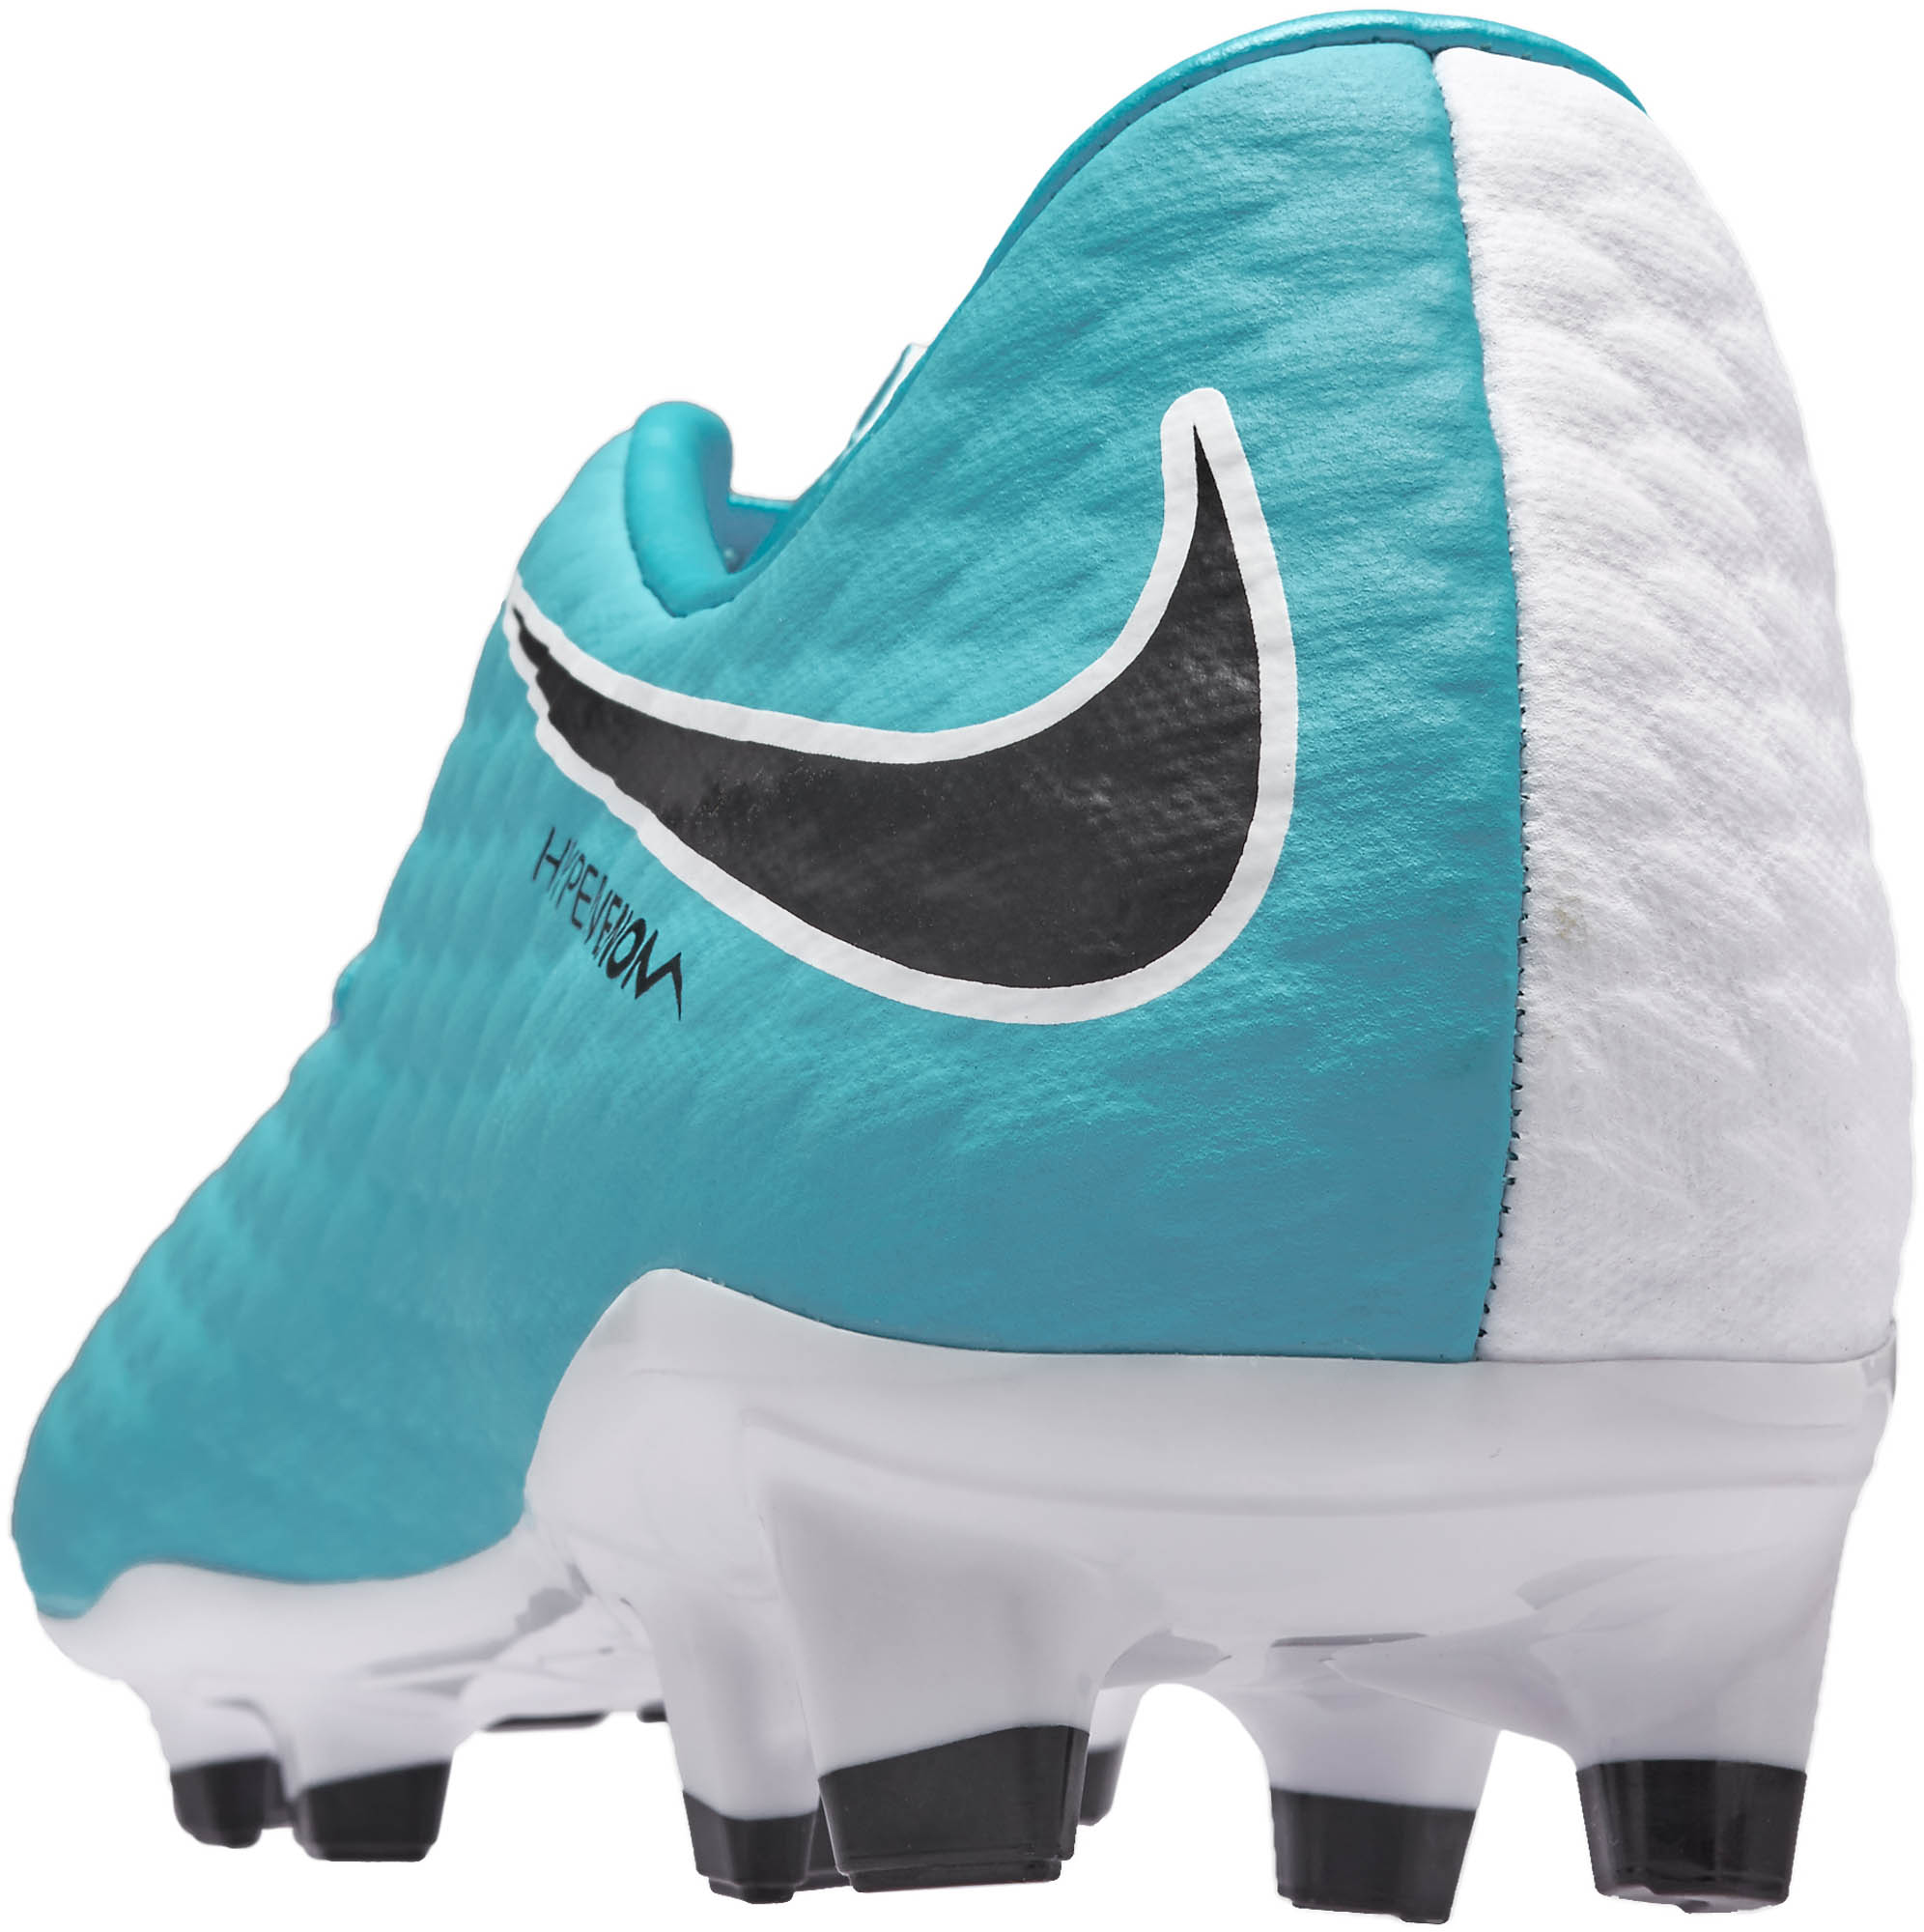 Nike Hypervenom Phelon III FG Soccer Cleats - White & Photo Blue ...